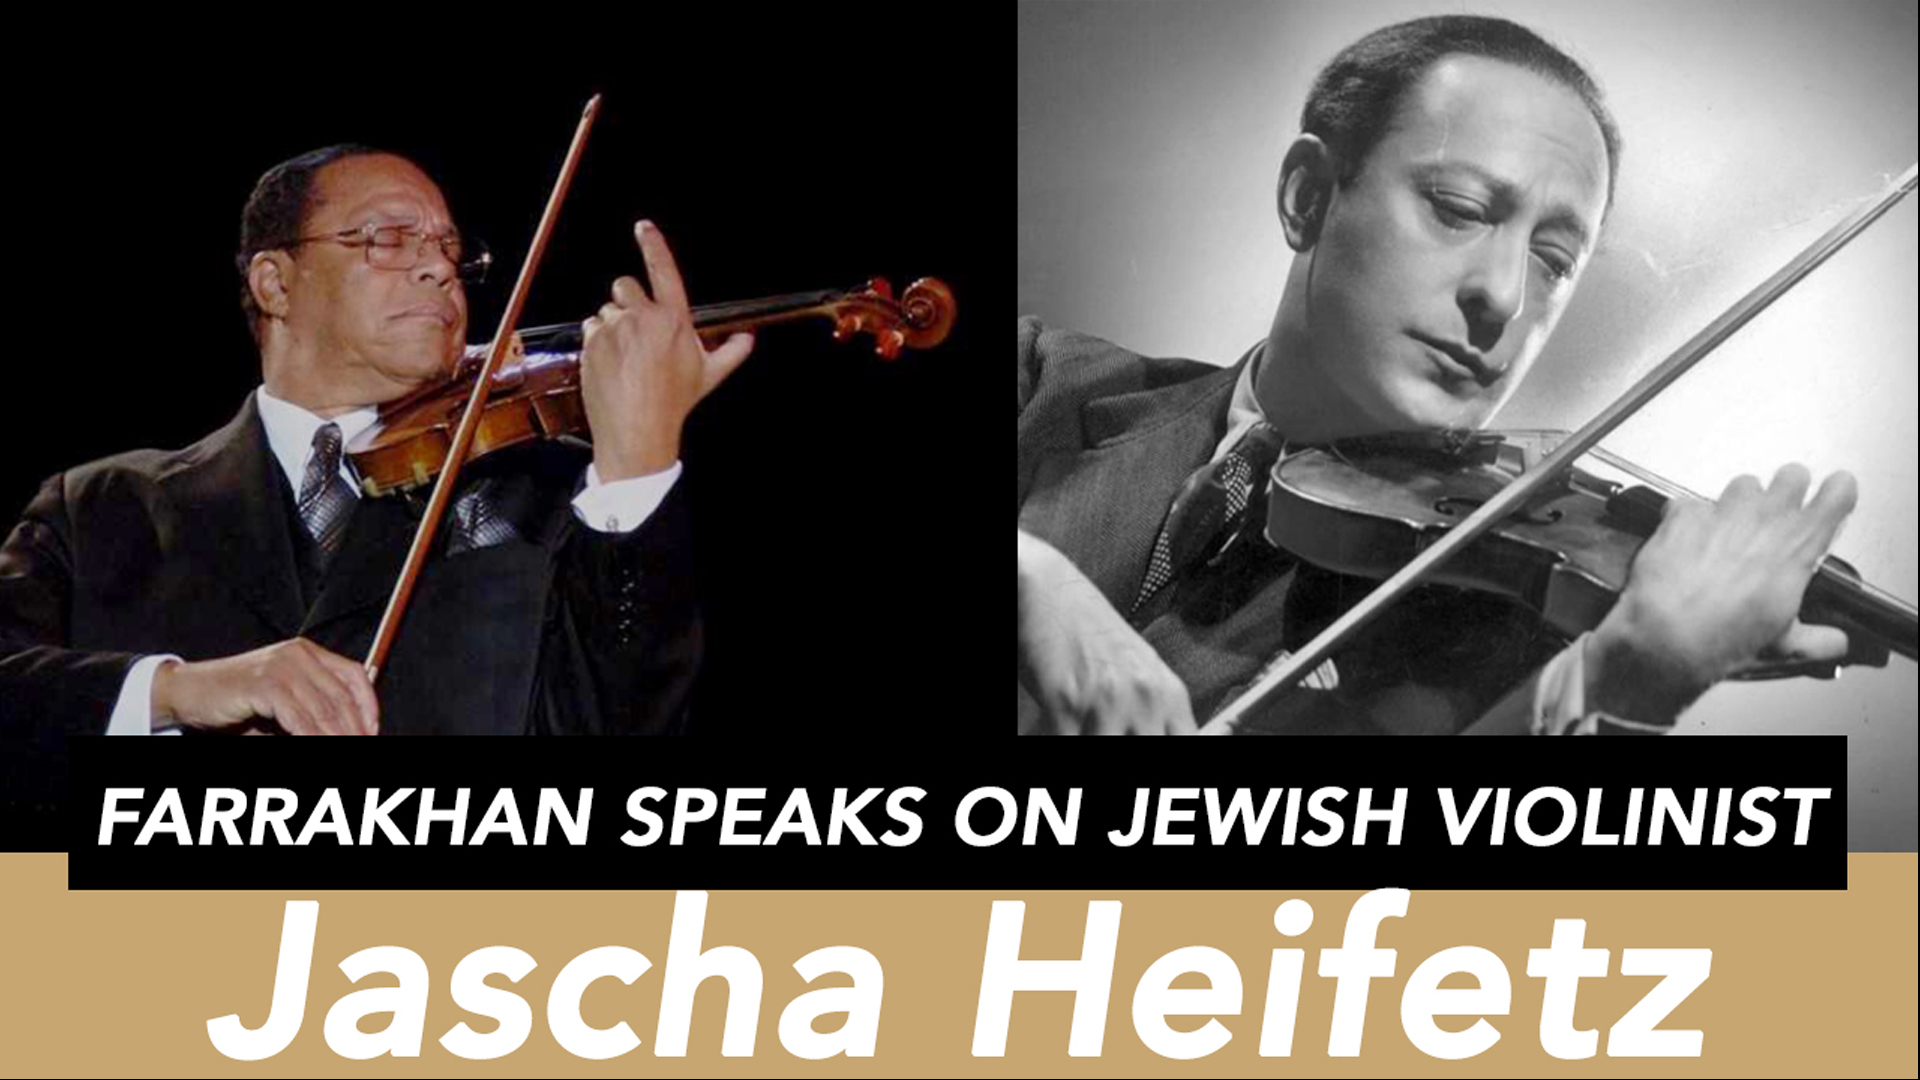 Minister Farrakhan speaks on Jewish violinist Jascha Heifetz